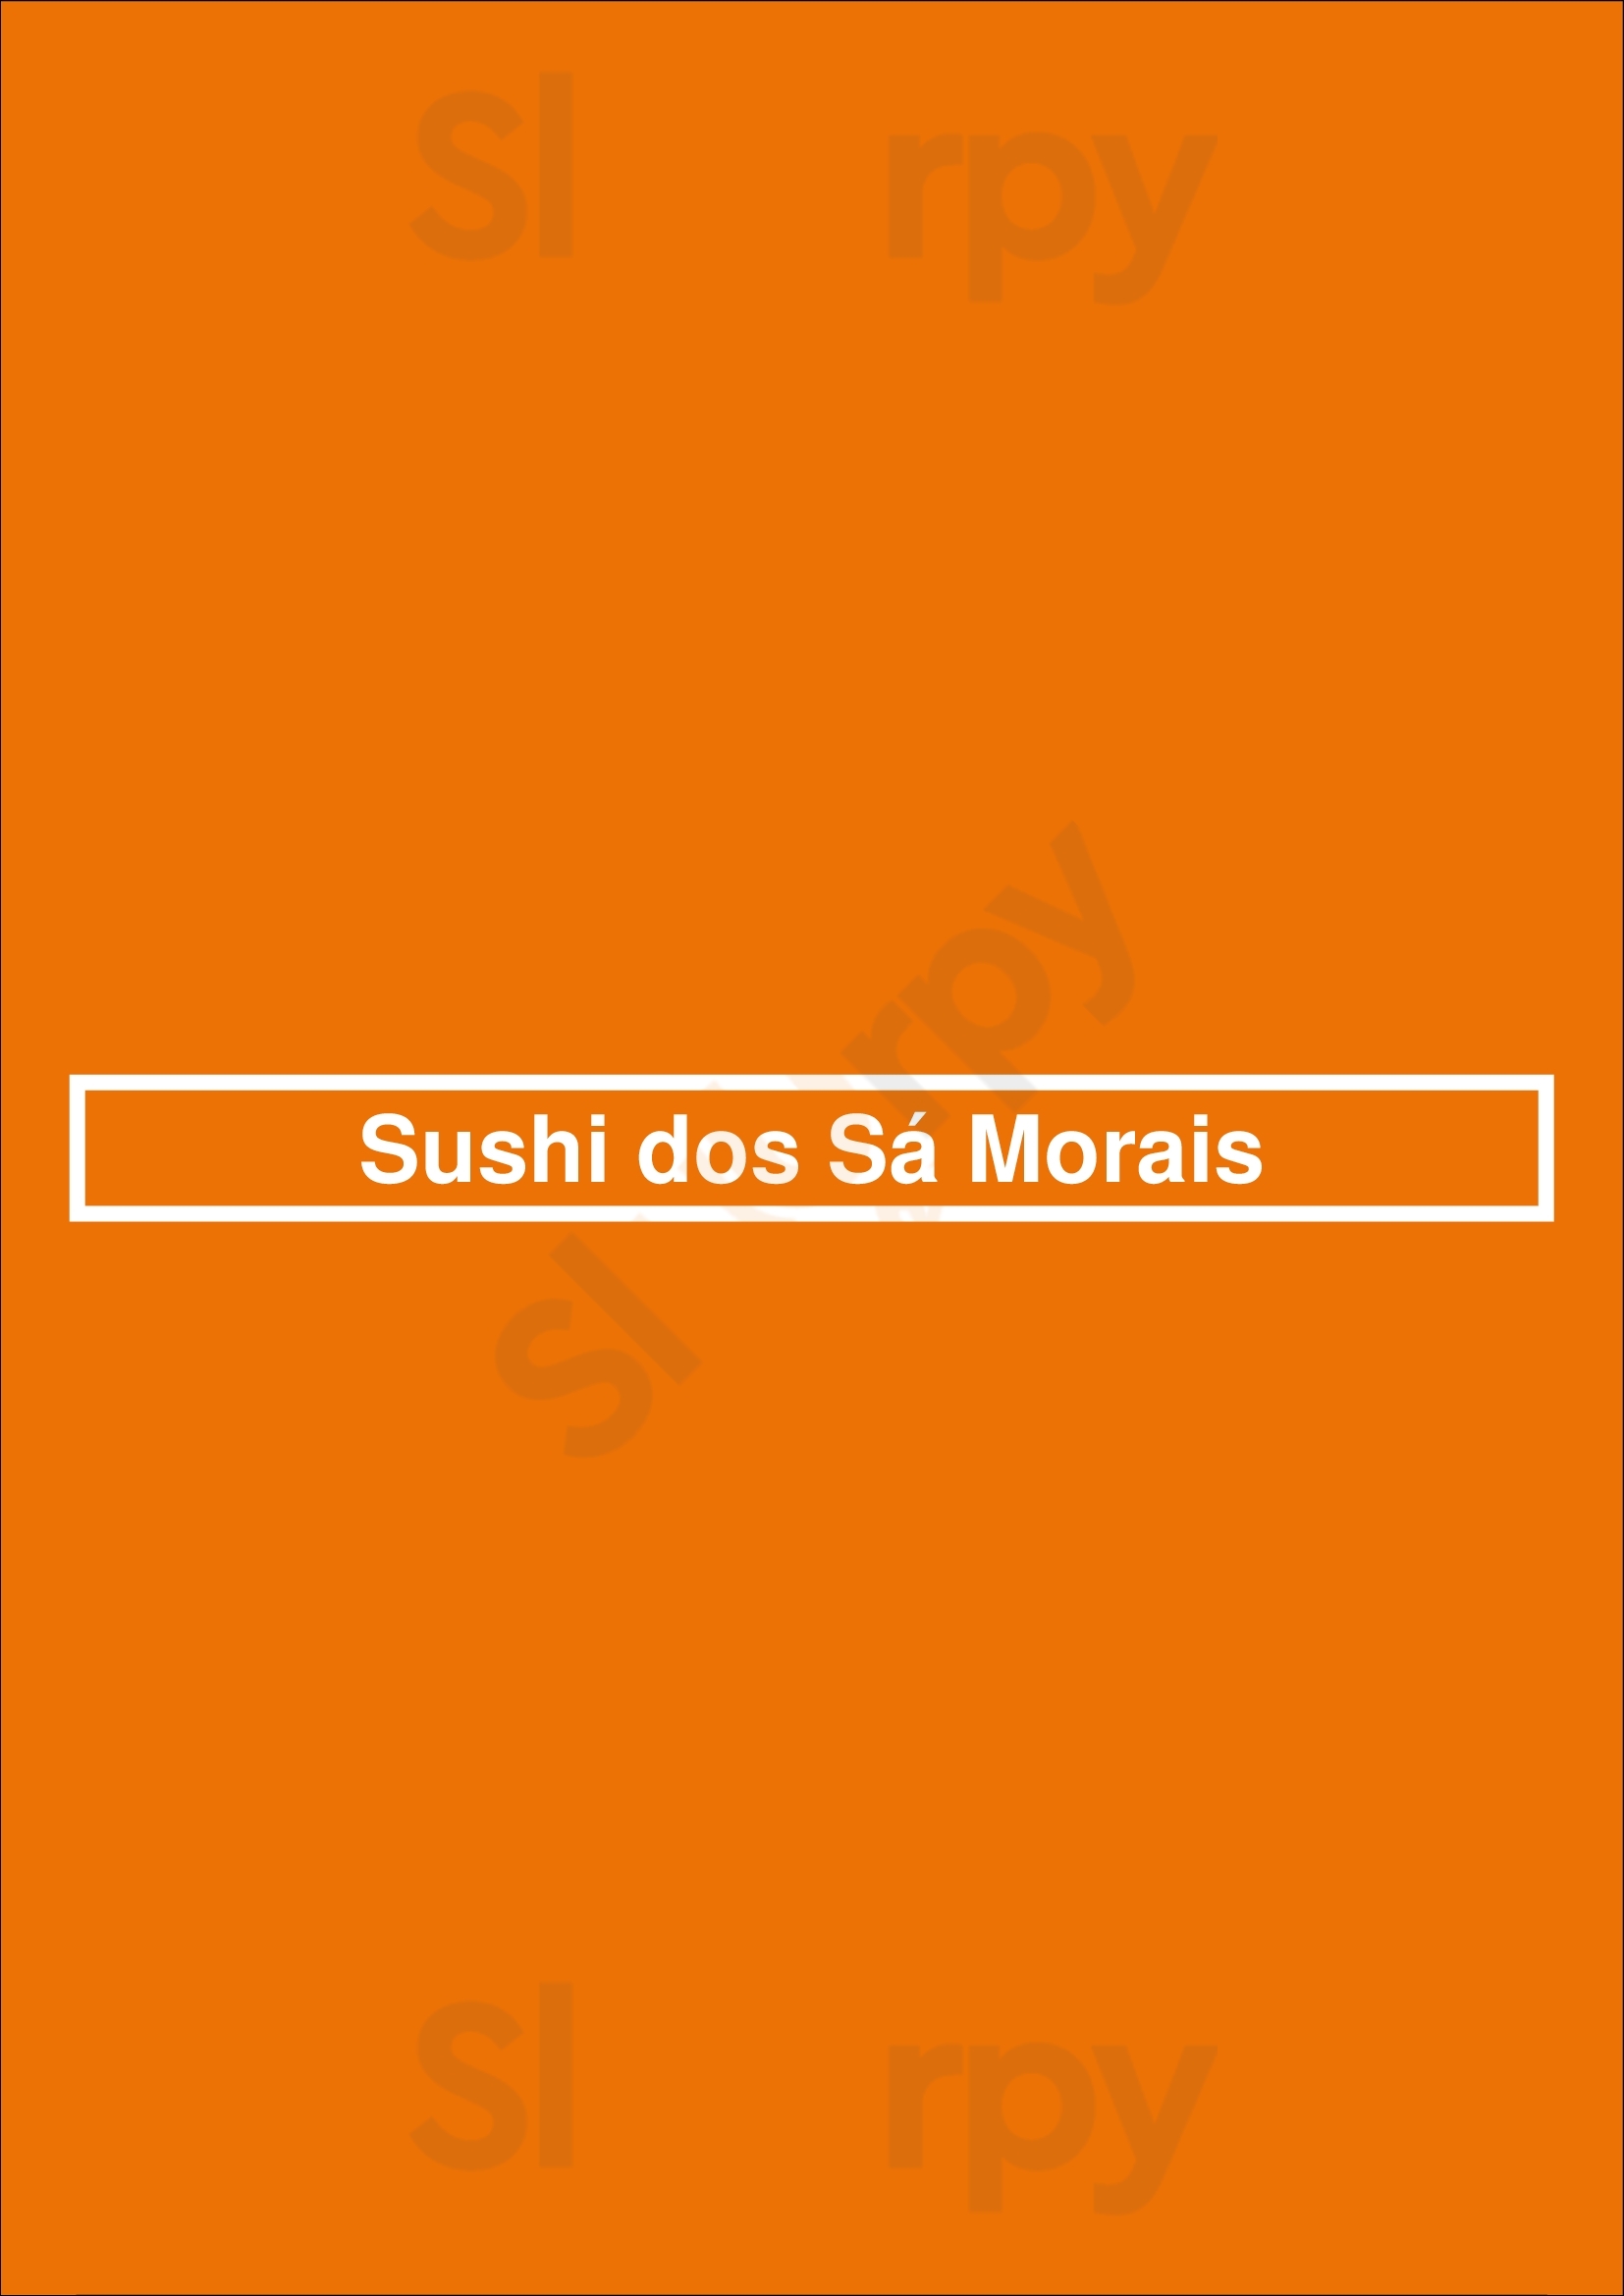 Sushi Dos Sá Morais Lisboa Menu - 1